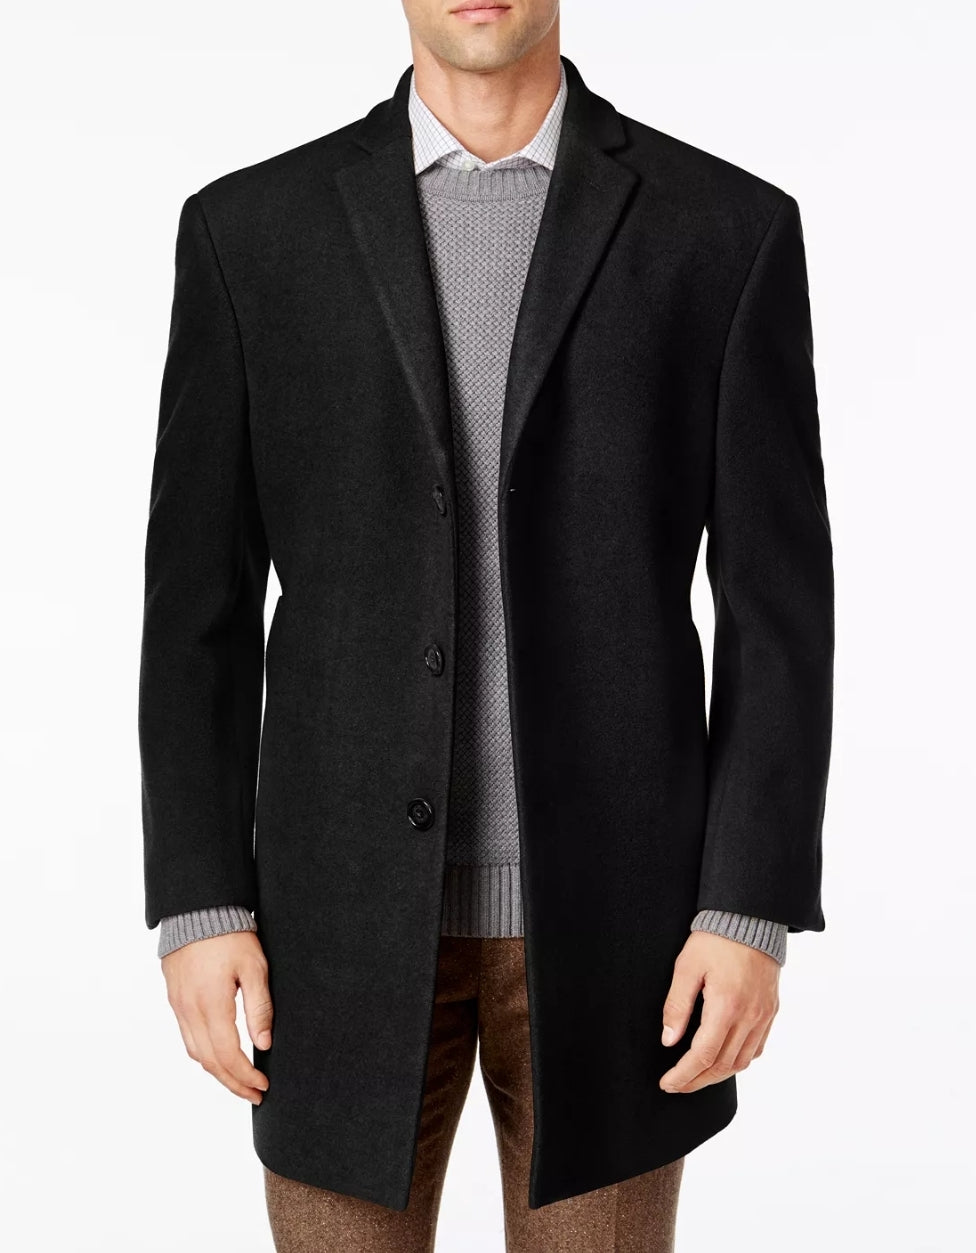 CALVIN KLEIN
Men's Prosper Wool-Blend Slim Fit Overcoat 52L 52L Dresses by Brands Overstock | Brands Overstock